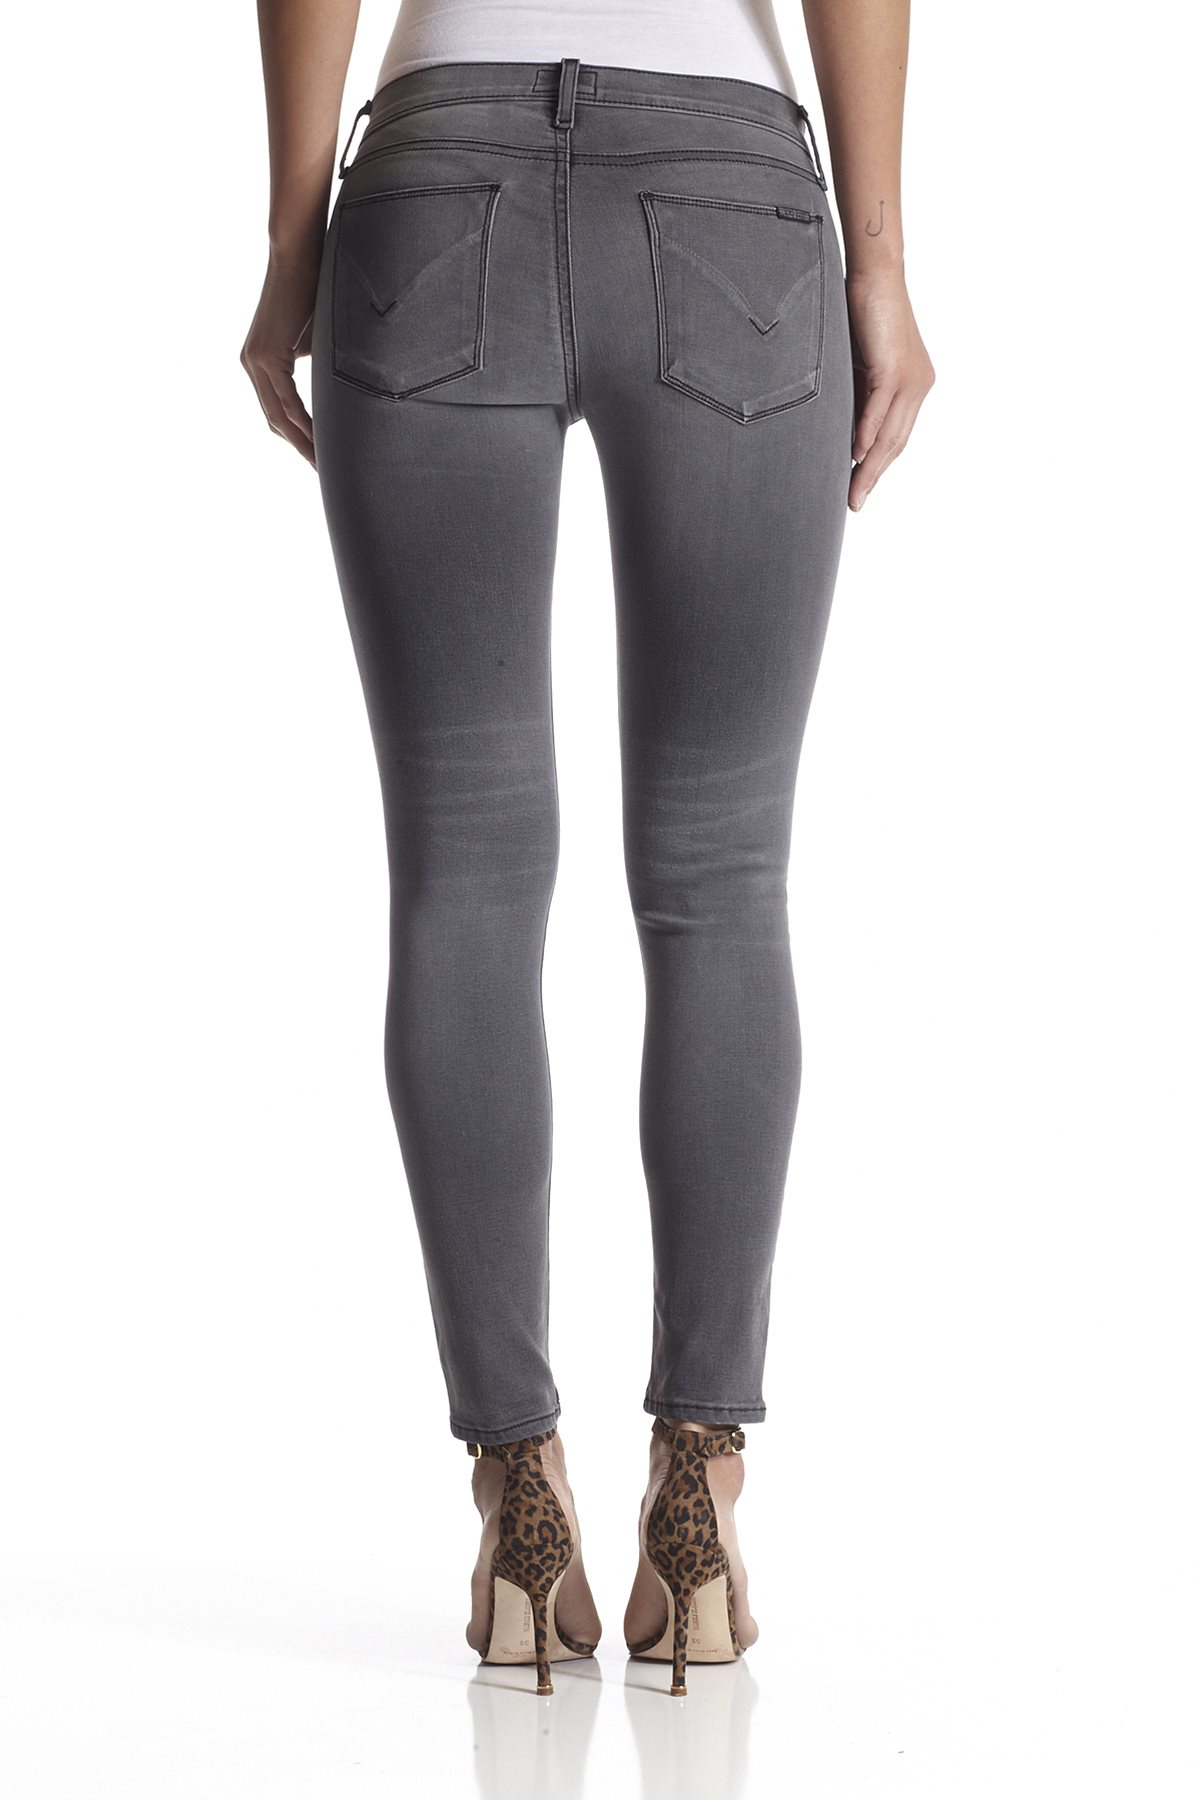 Hudson jeans Krista Ankle Super Skinny in Gray | Lyst